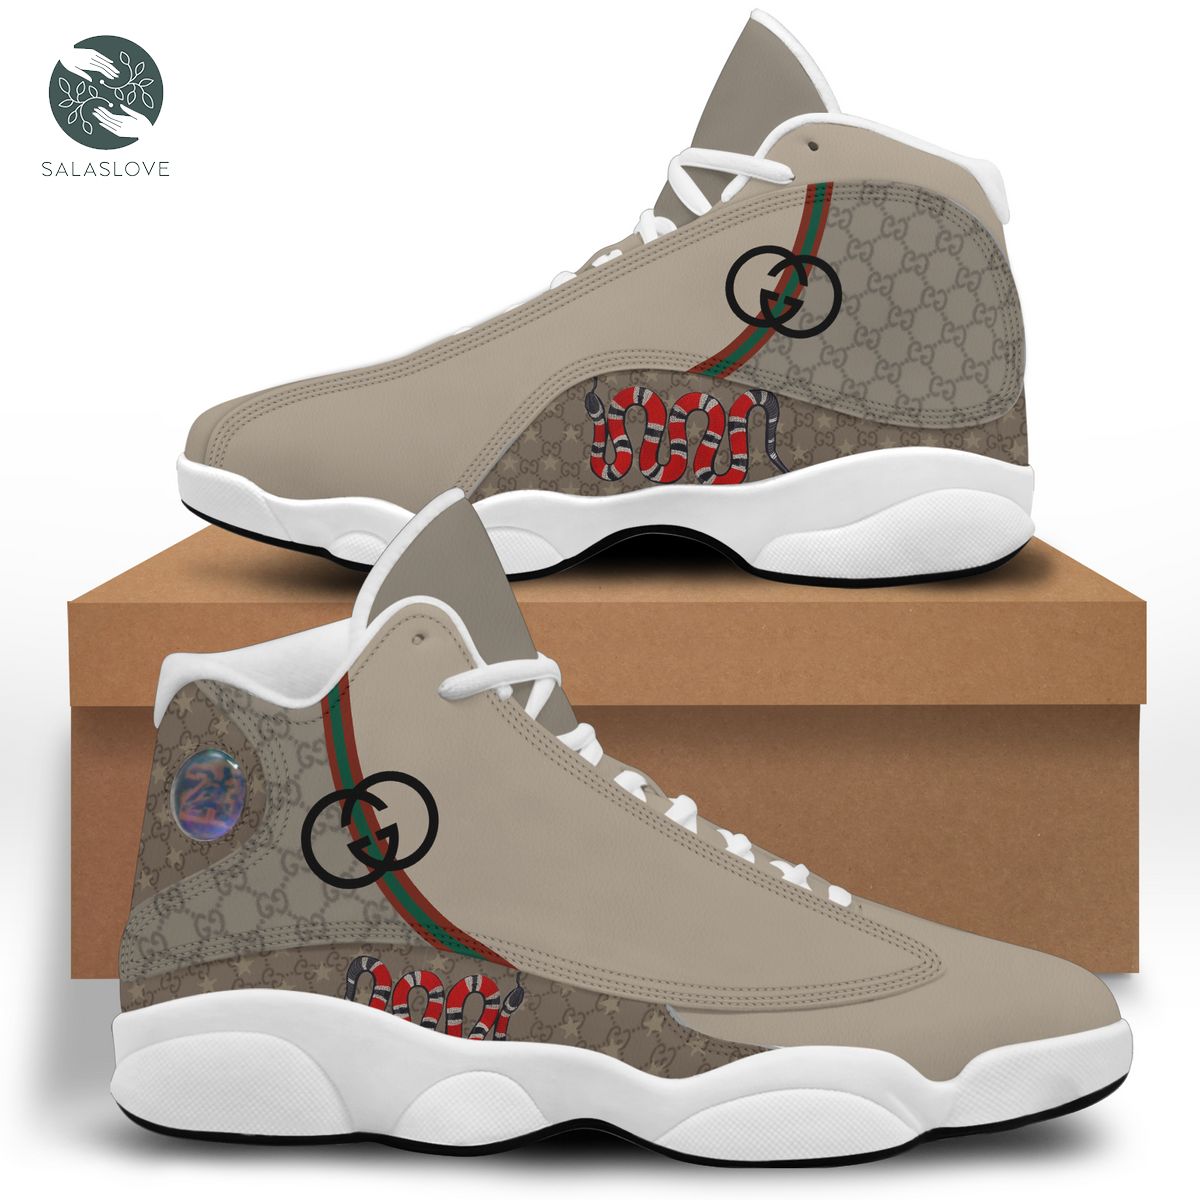 Gucci Retro Snake Air Jordan 13 Sneakers Shoes Gifts For Men Women